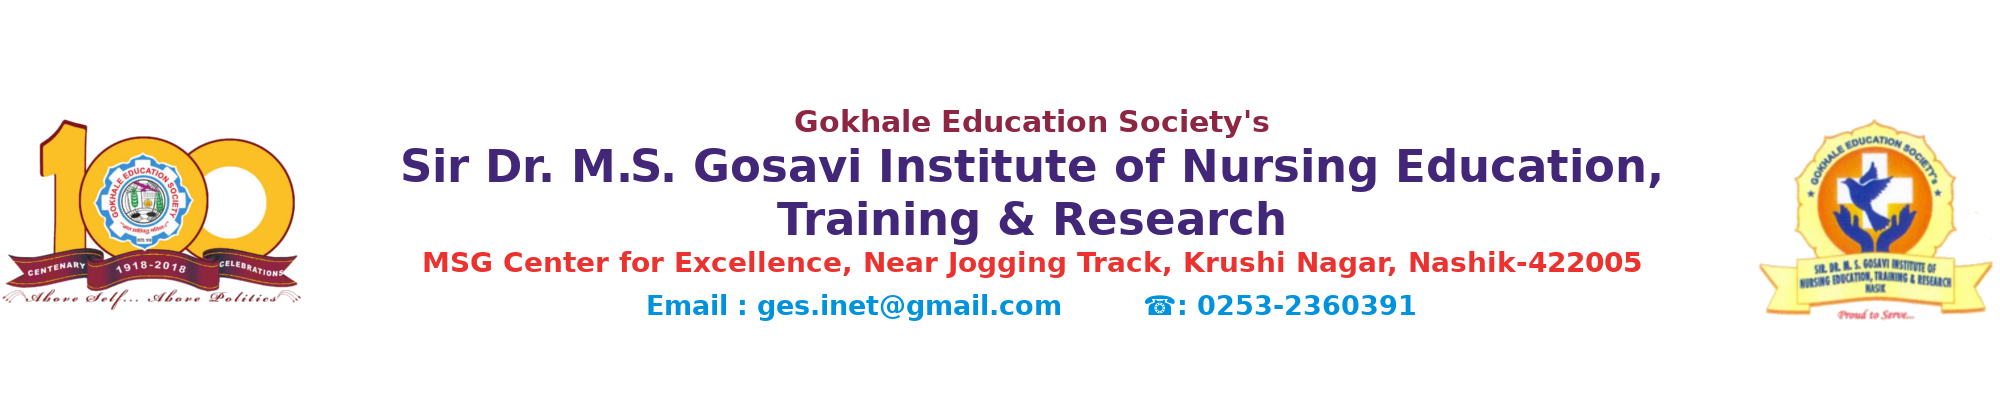 Sir Dr. M.S. Gosavi Institute of Nursing Education, Training and Research